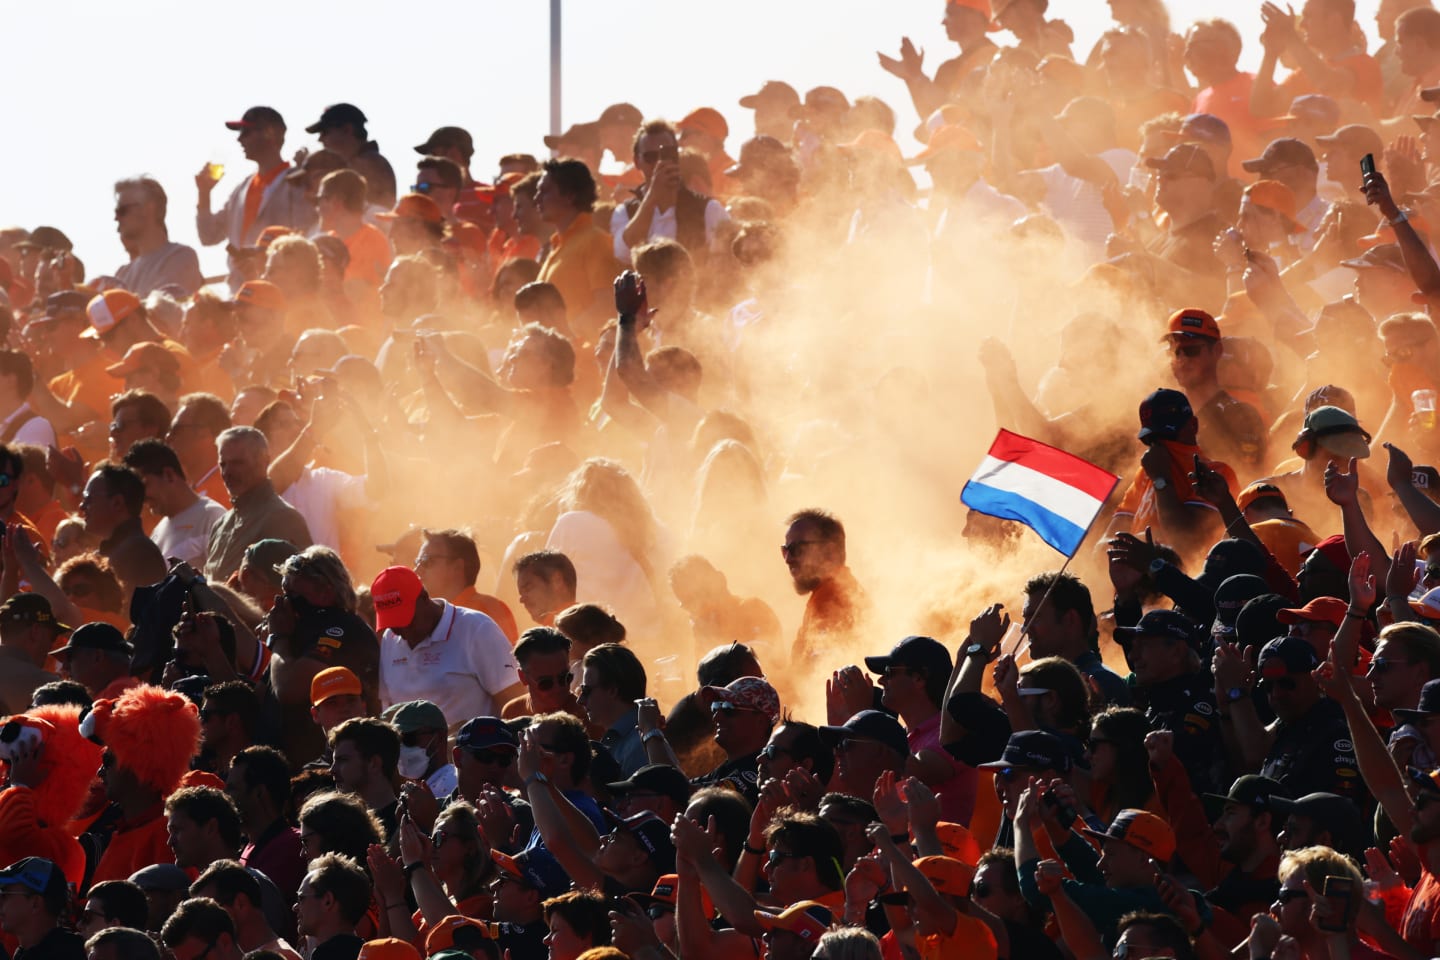 ZANDVOORT, NETHERLANDS - SEPTEMBER 04: Max Verstappen of Netherlands and Red Bull Racing fans show